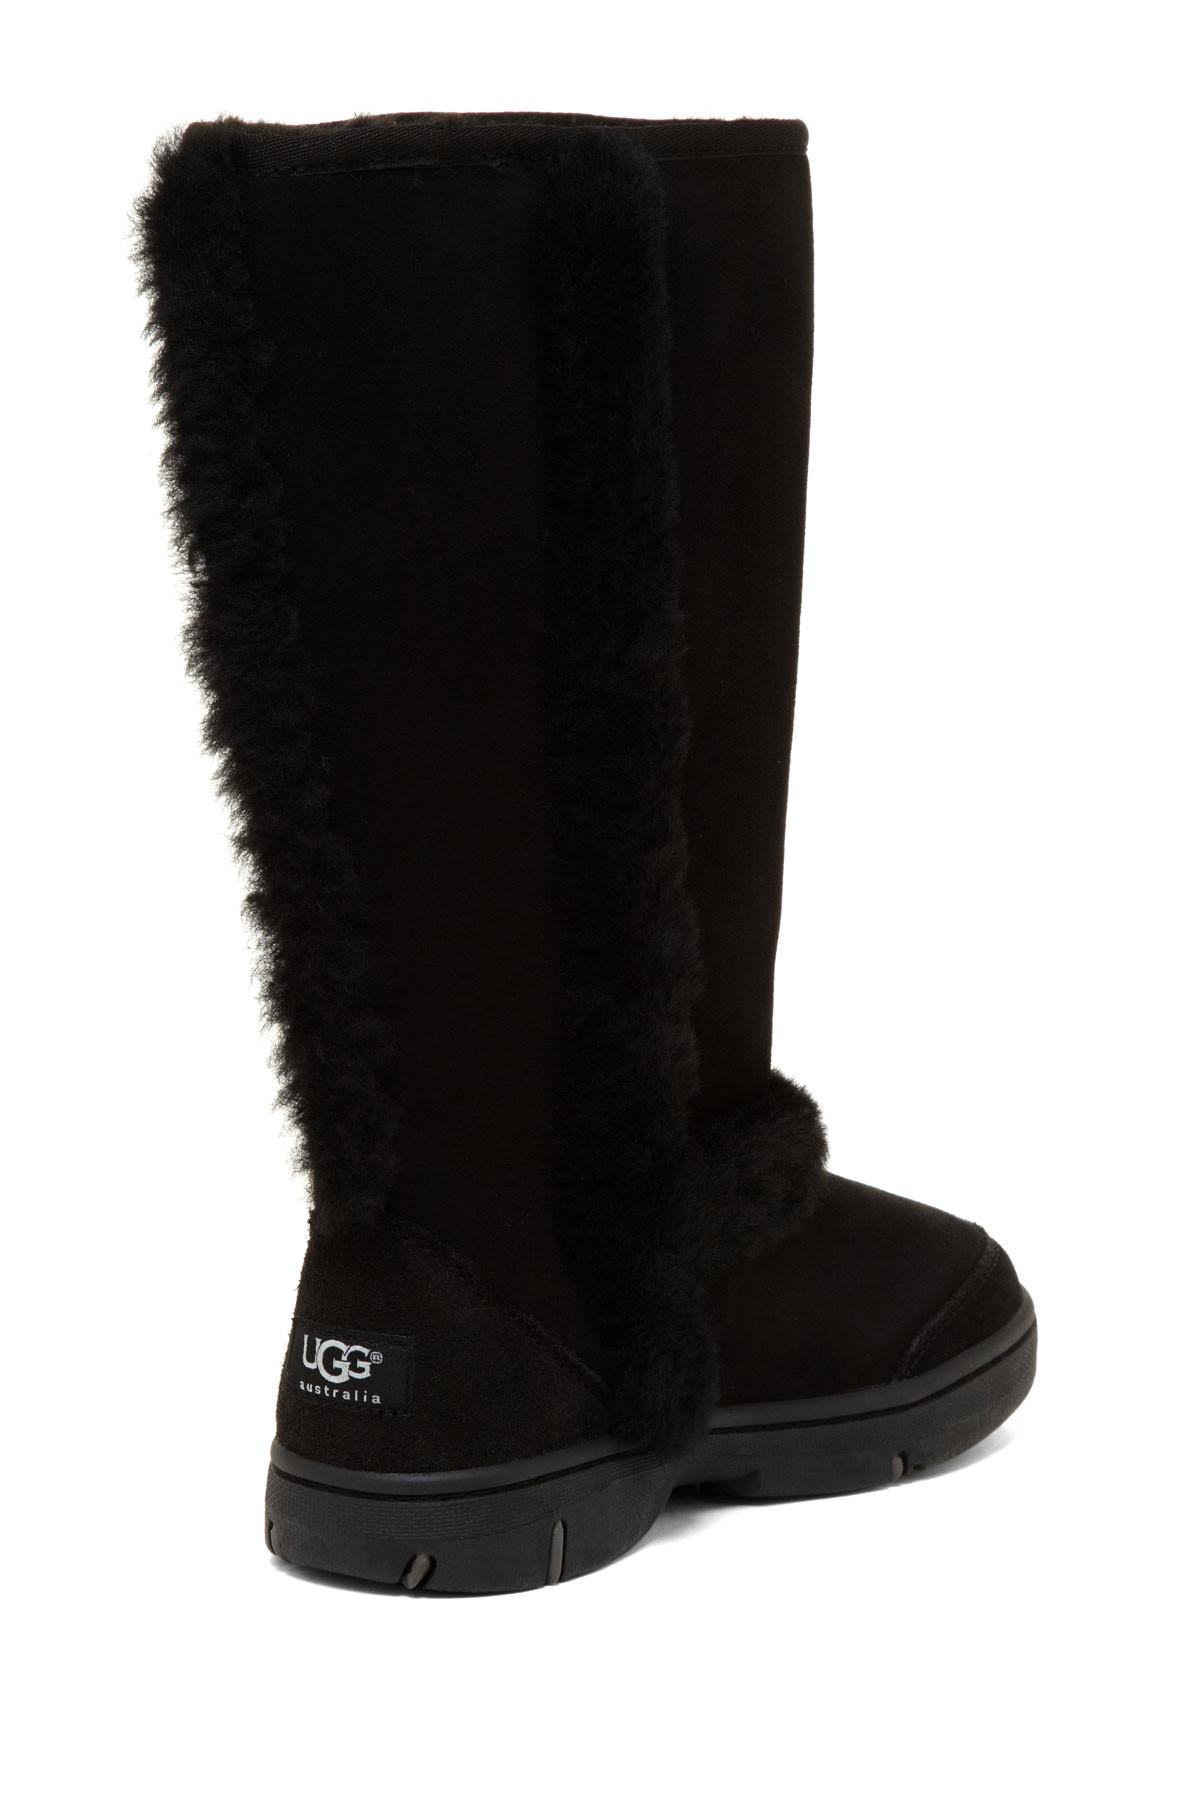 UGG Sunburst Genuine Sheepskin Tall Boot in Black - Lyst